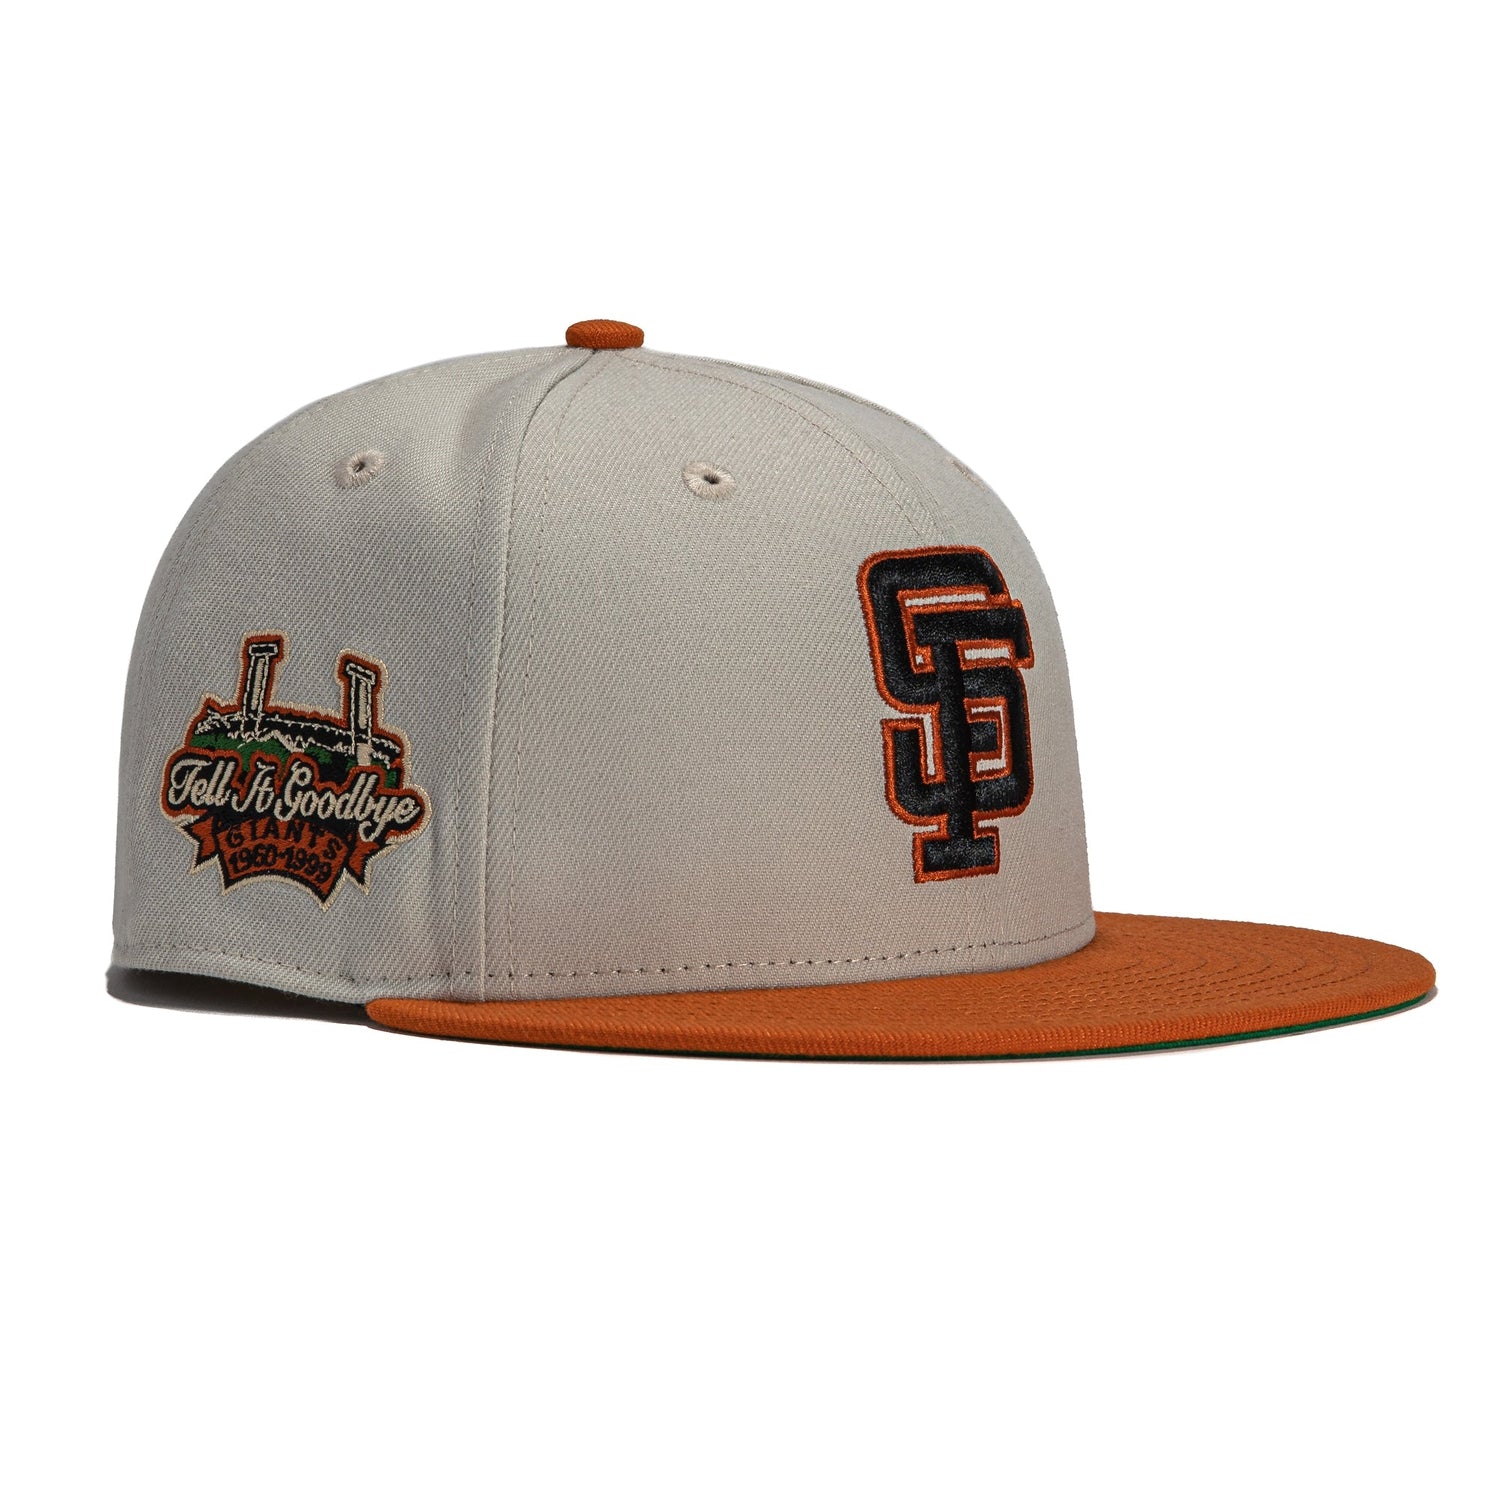 New Era 59FIFTY San Francisco Giants Tell It Goodbye Patch Hat - Stone, Burnt Orange Stone/Burnt Orange / 7 5/8